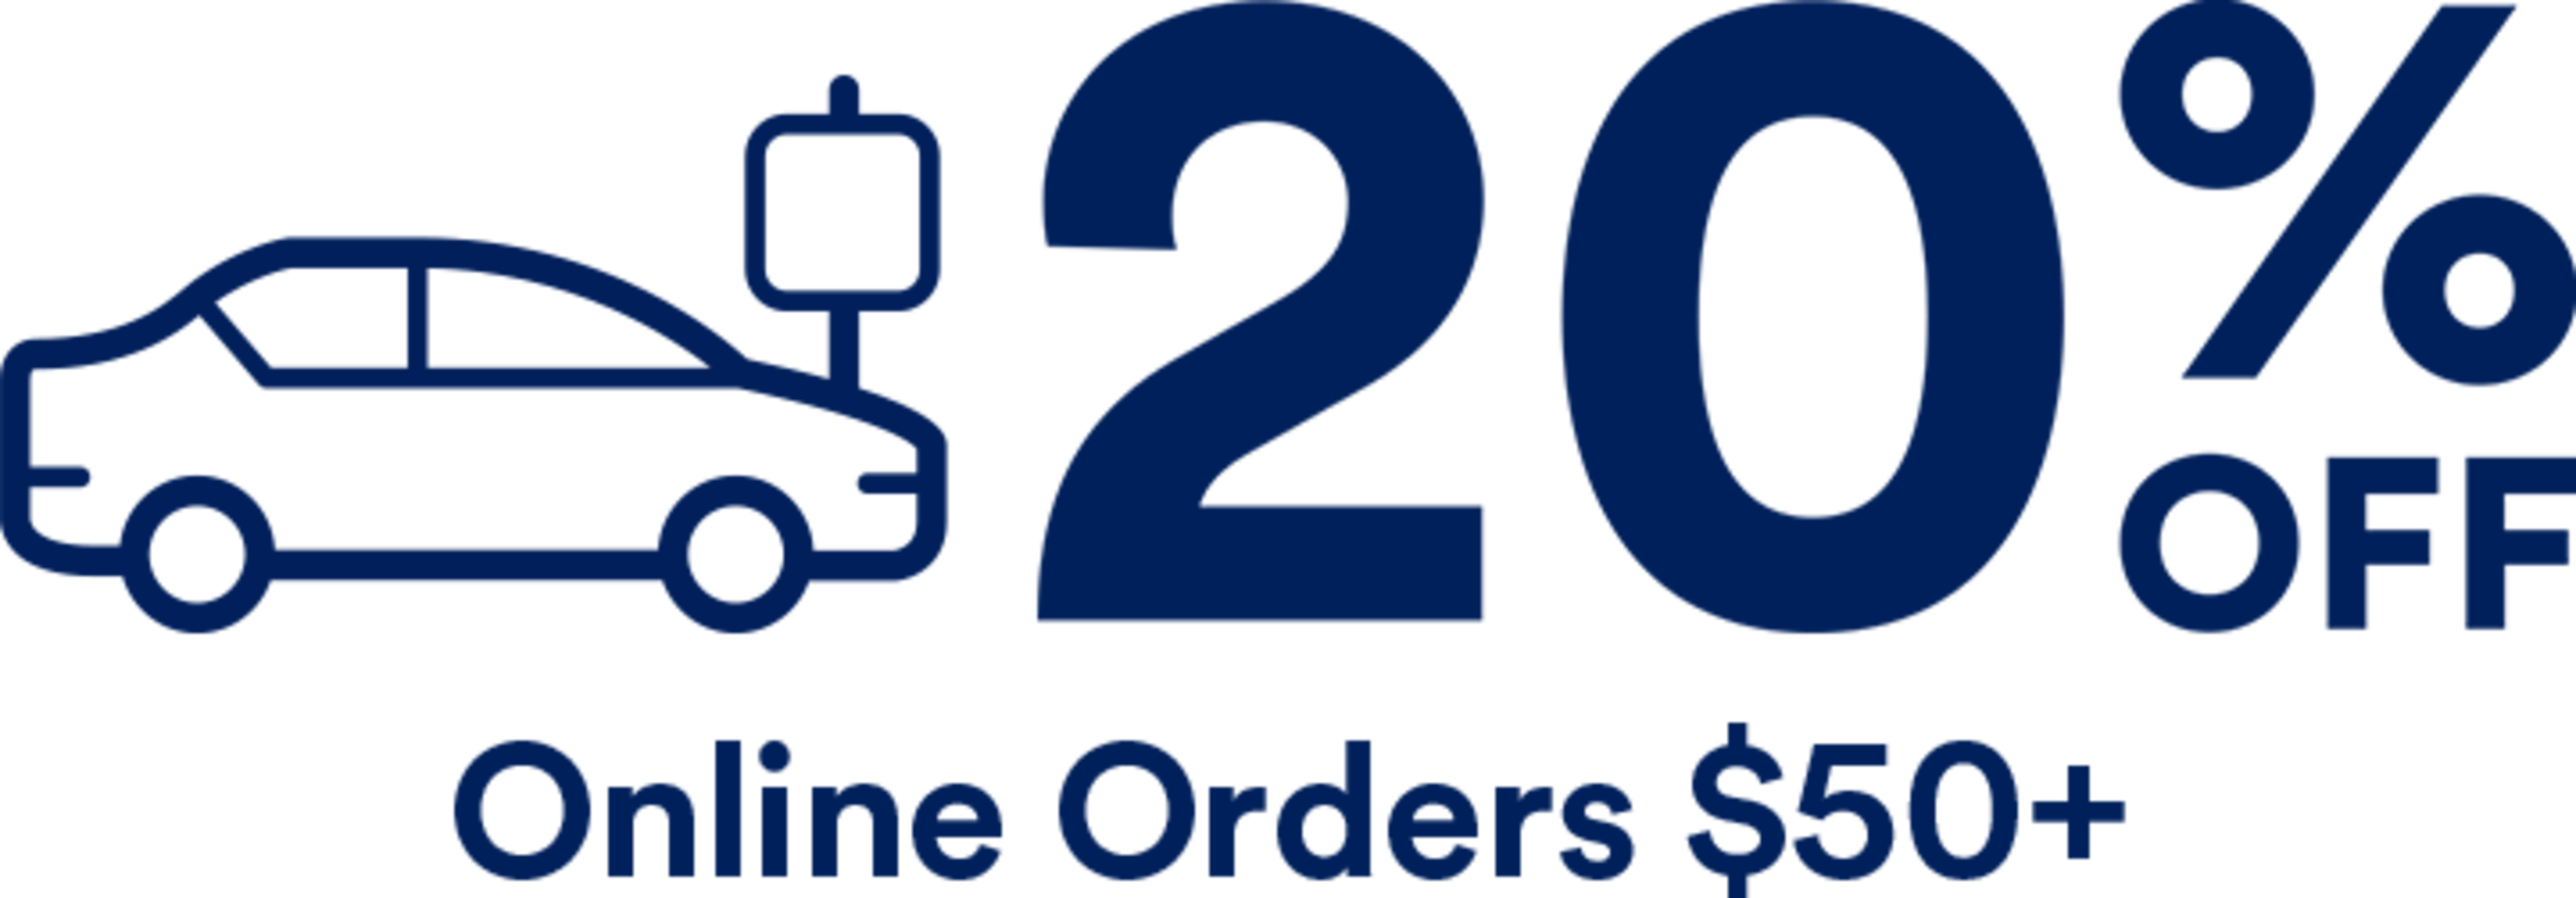 20% off Online Orders $50+.